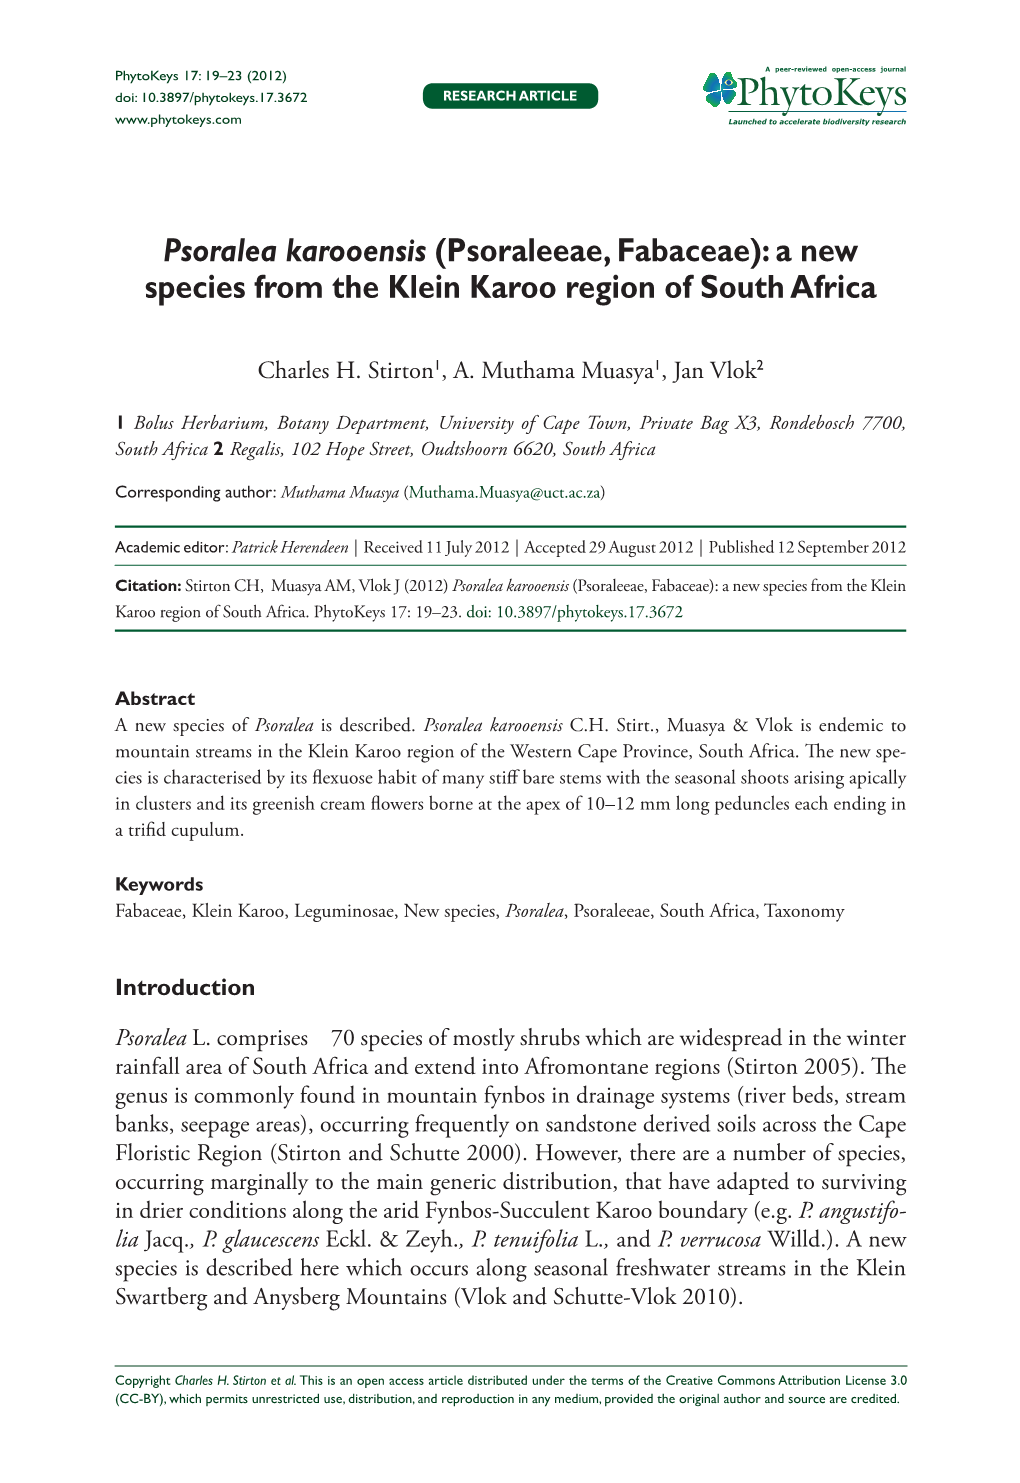 Psoralea Karooensis (Psoraleeae, Fabaceae): a New Species from the Klein Karoo Region of South Africa